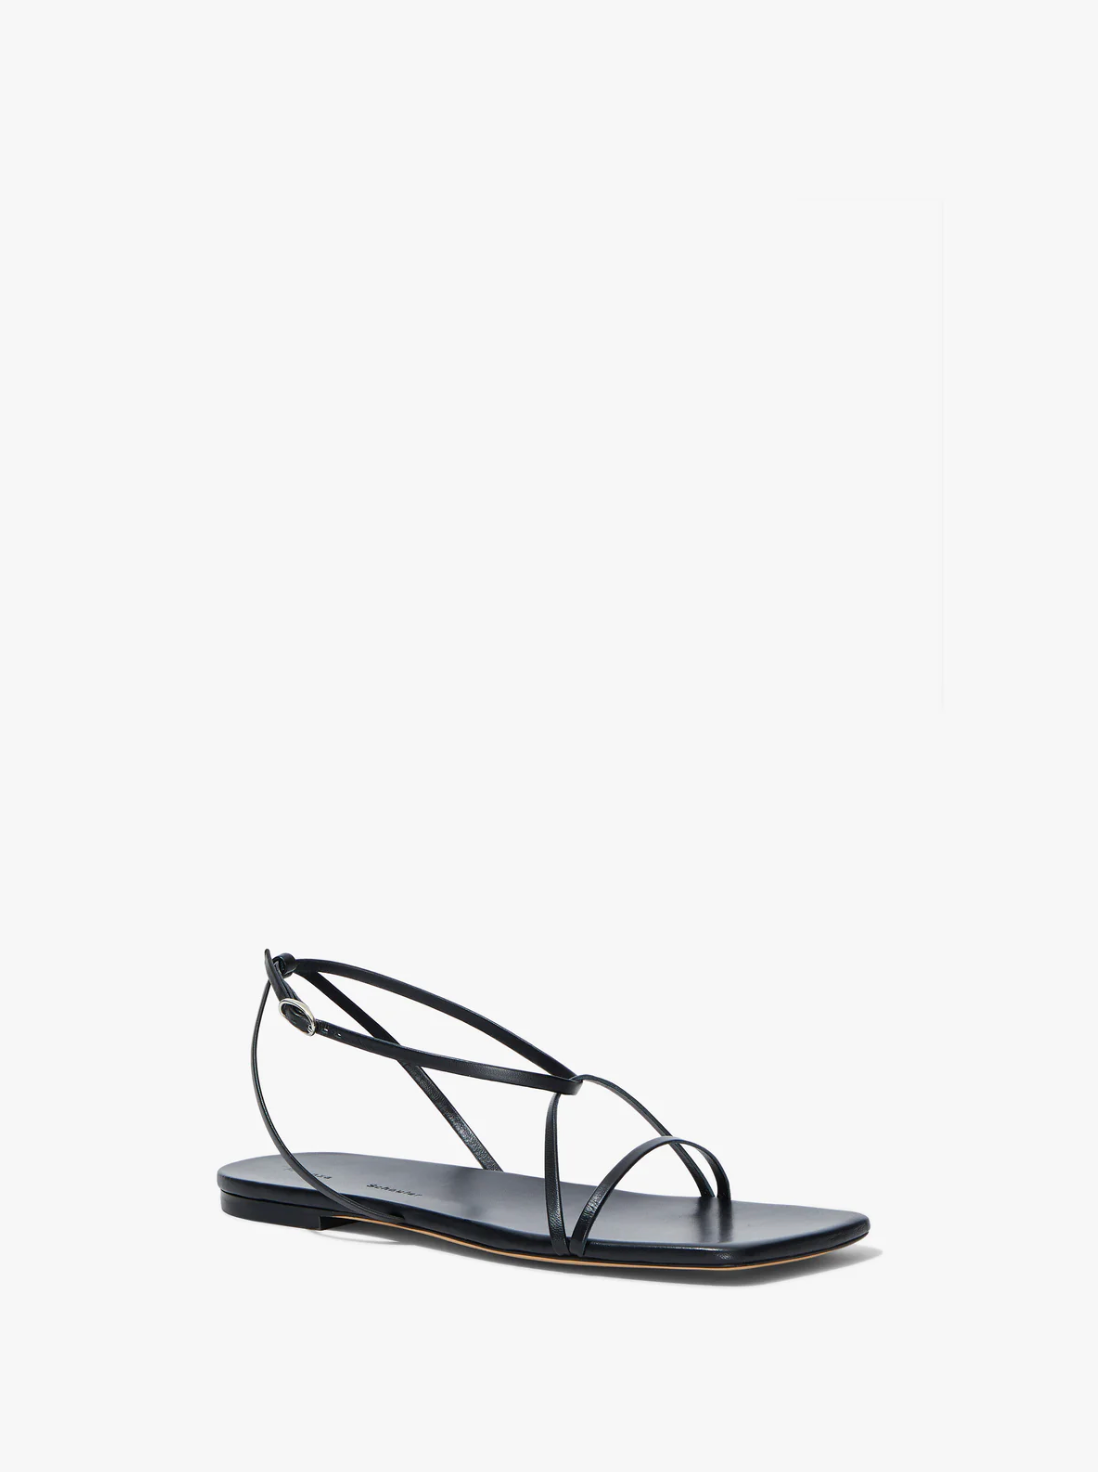 Proenza Schouler Shoes Square Flat Strappy Sandals Soho-Boutique